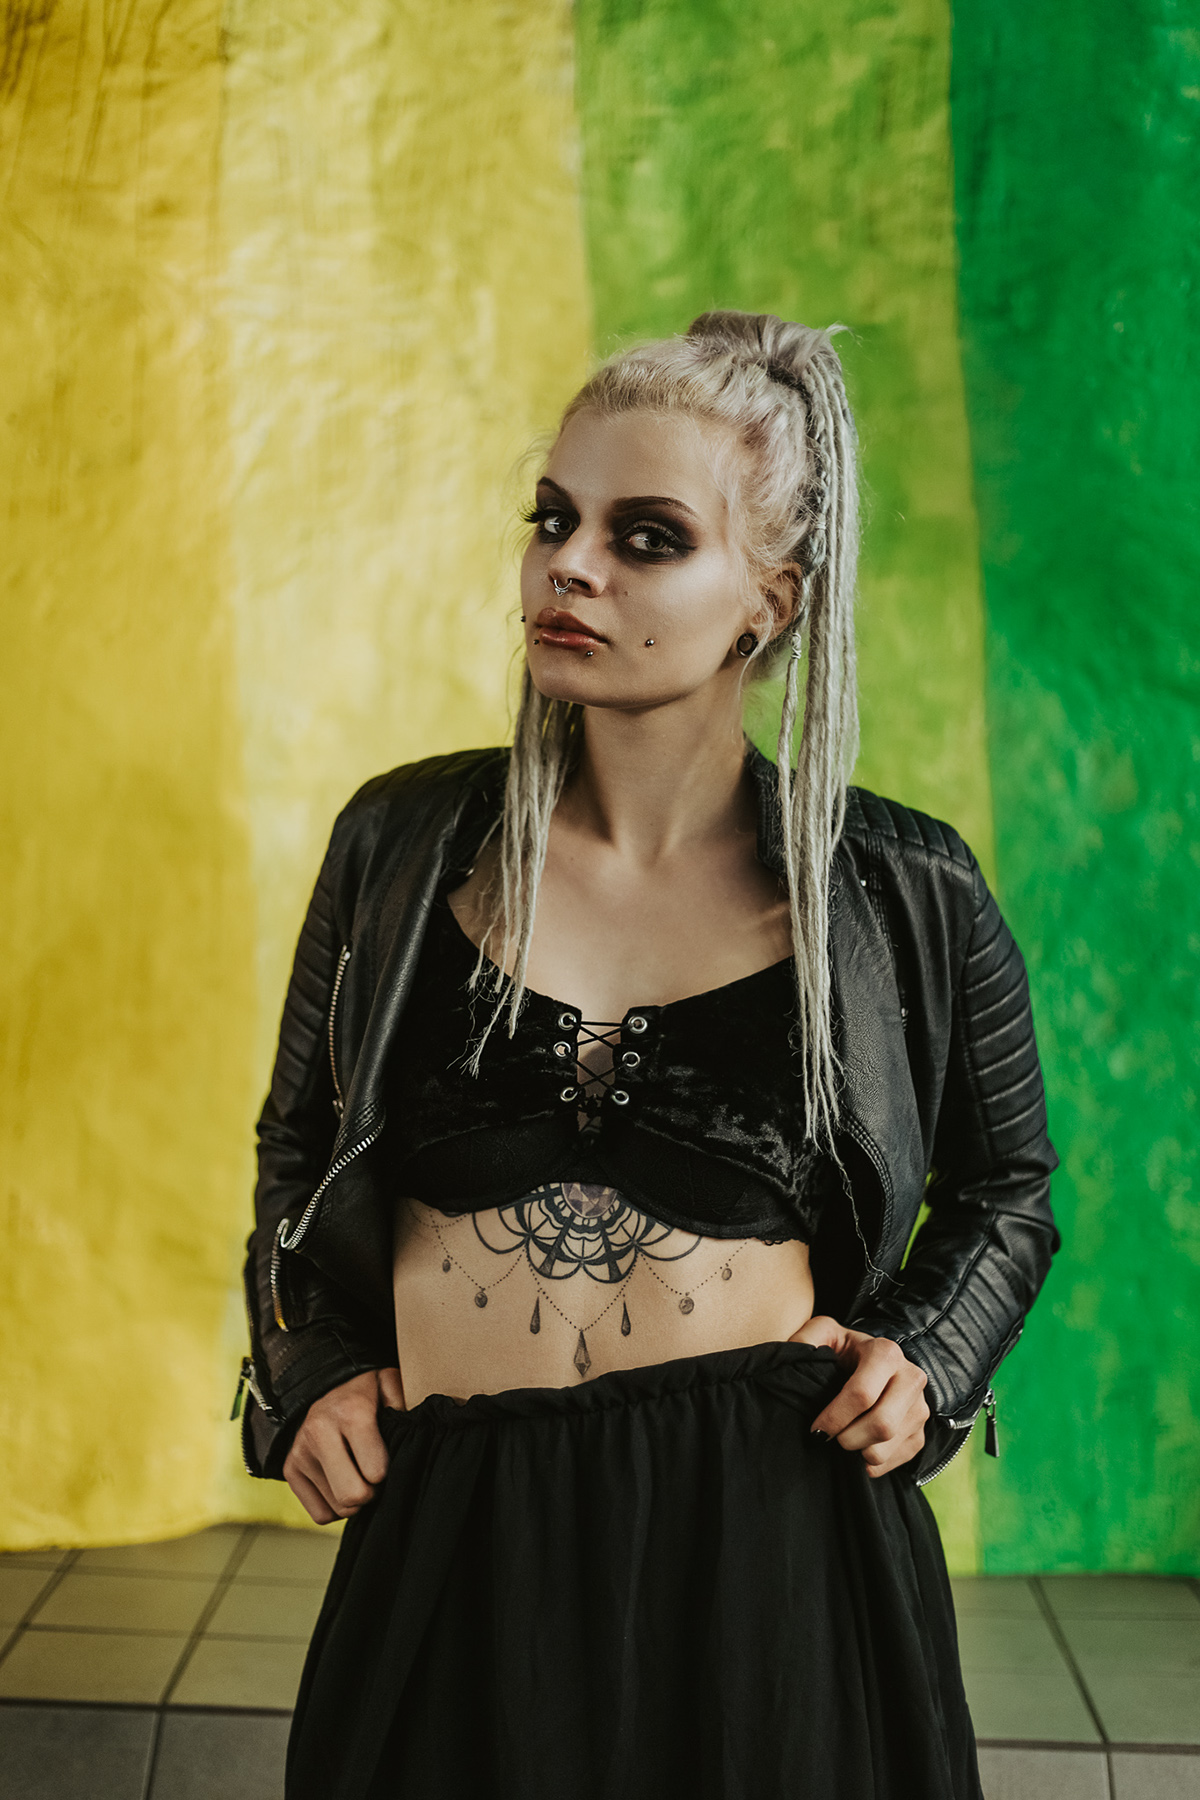 Stockholm Sweden gay Gaypride tattoo punk goth piercing whitehair braid